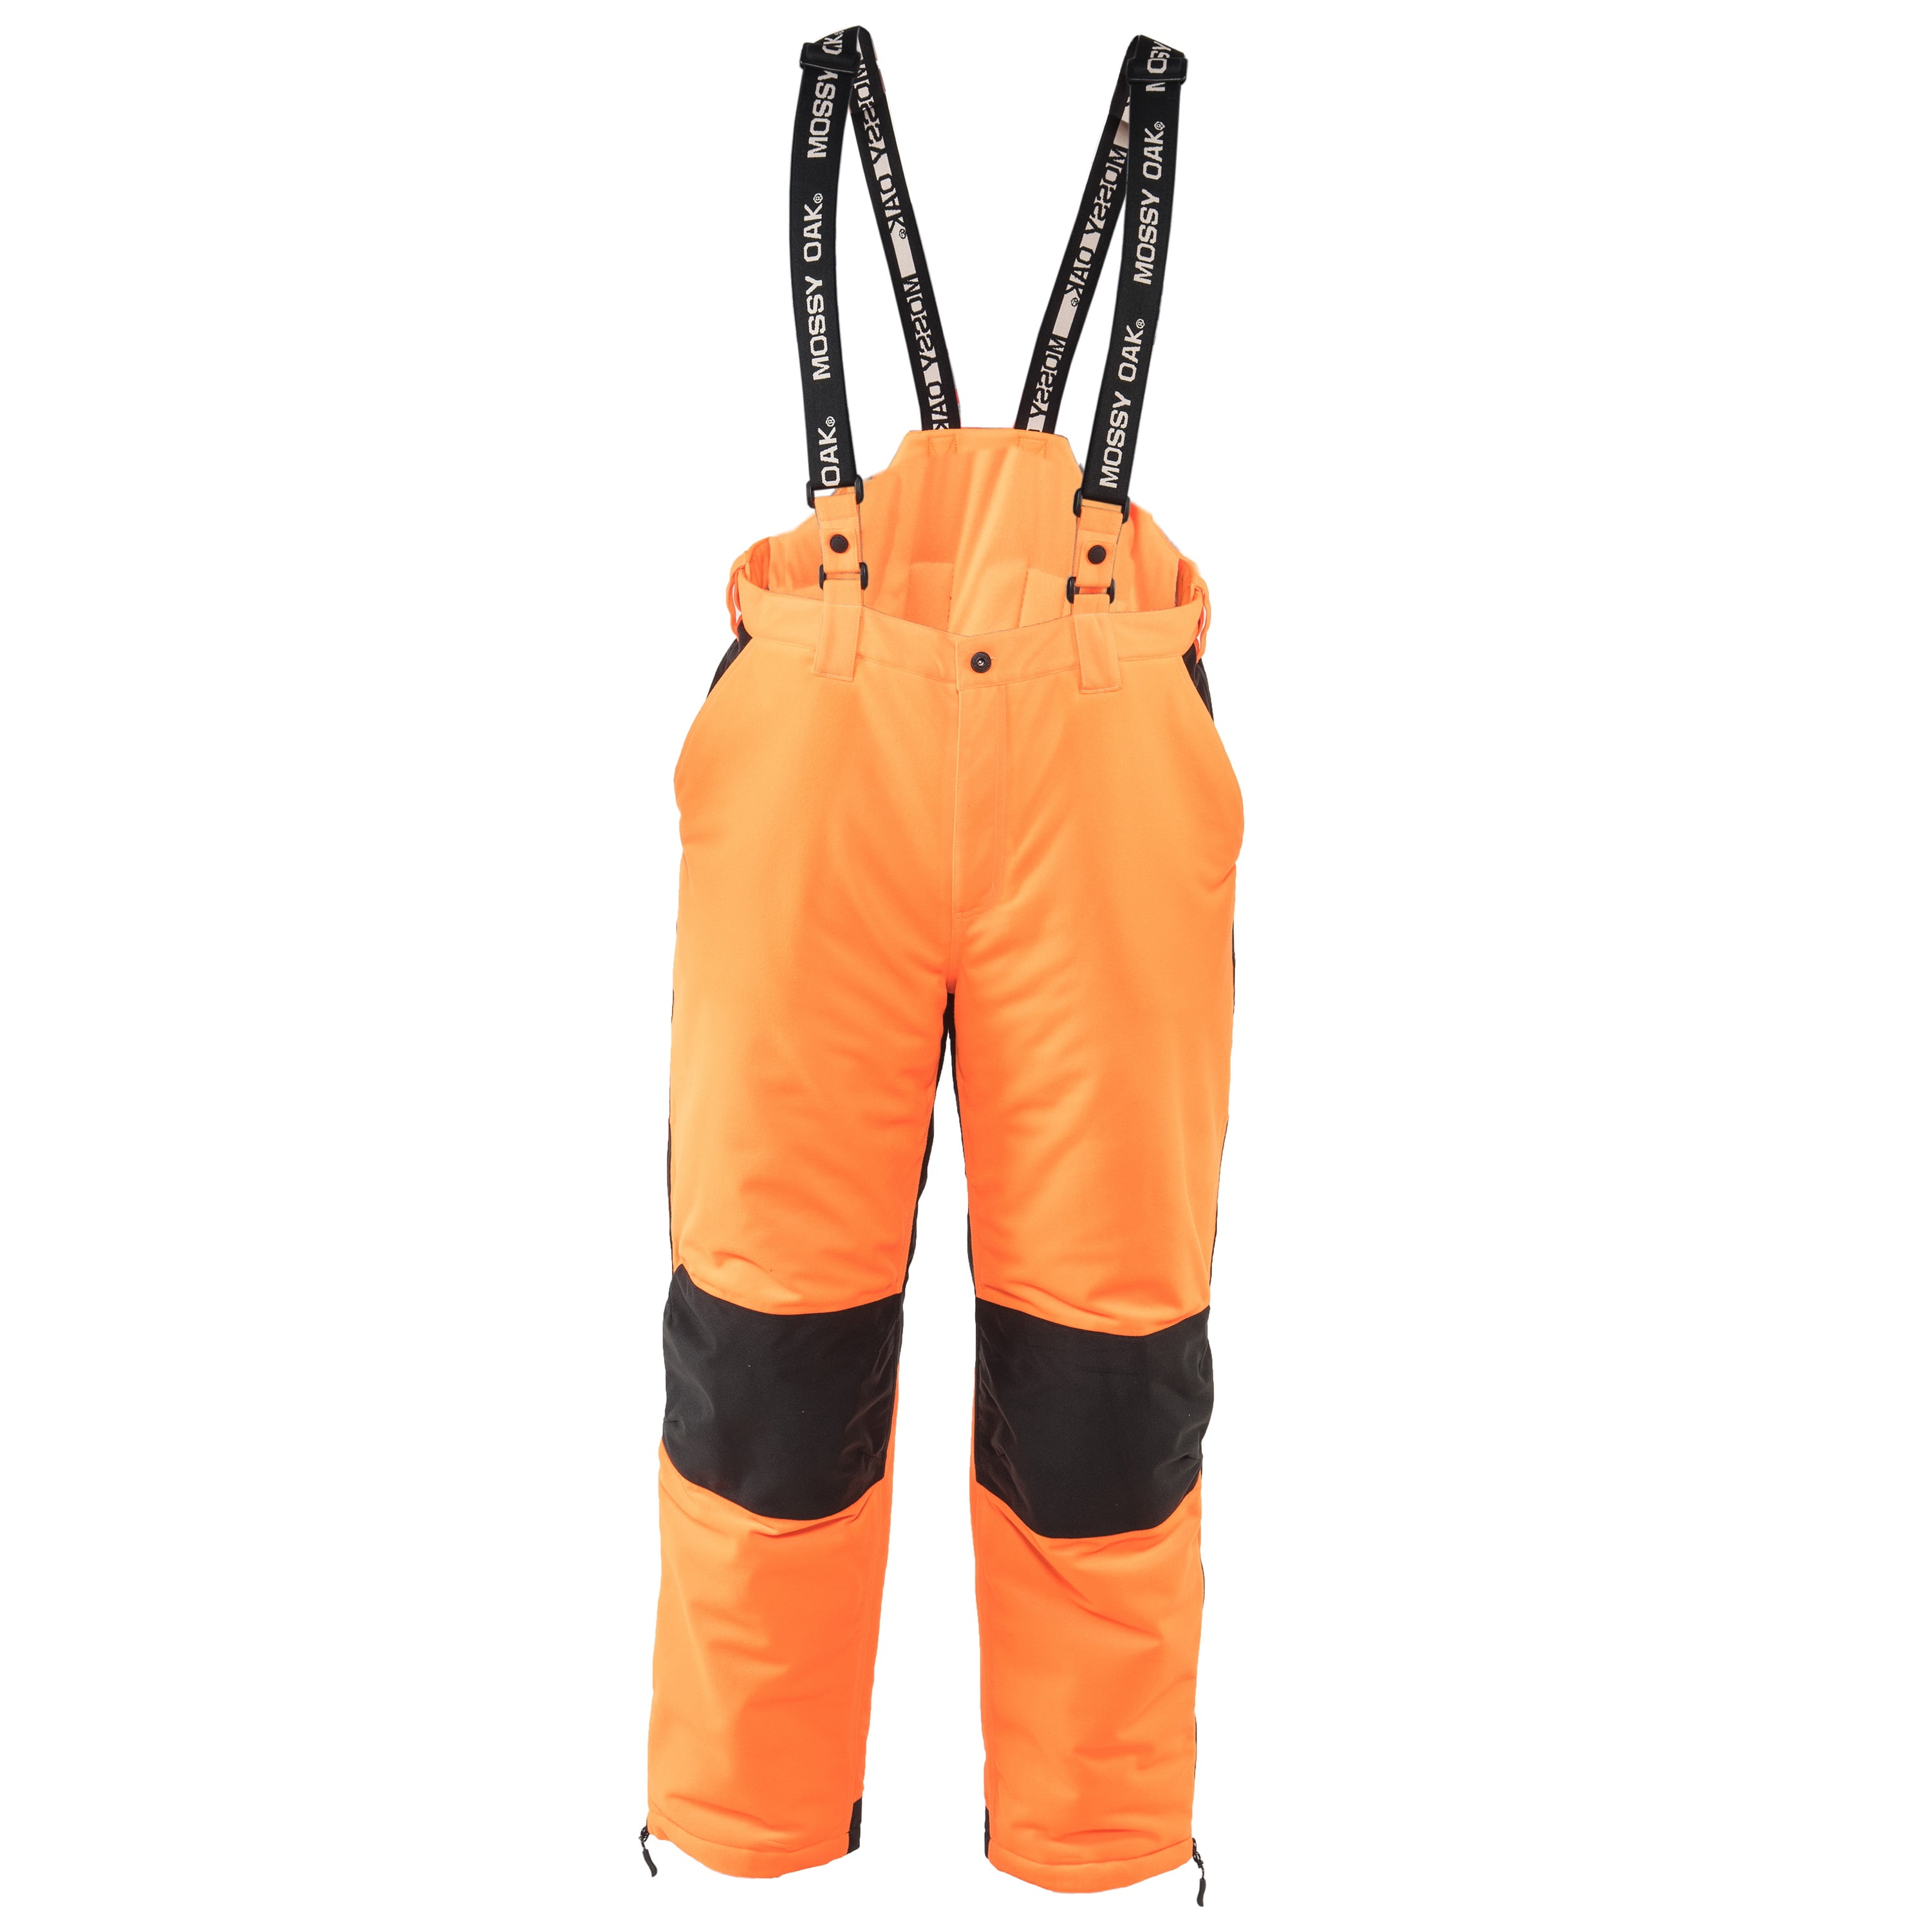 Mossy Oak Blaze Orange Men's Insulated Hunting Bib Overalls, up to Size  3XL, Adult 